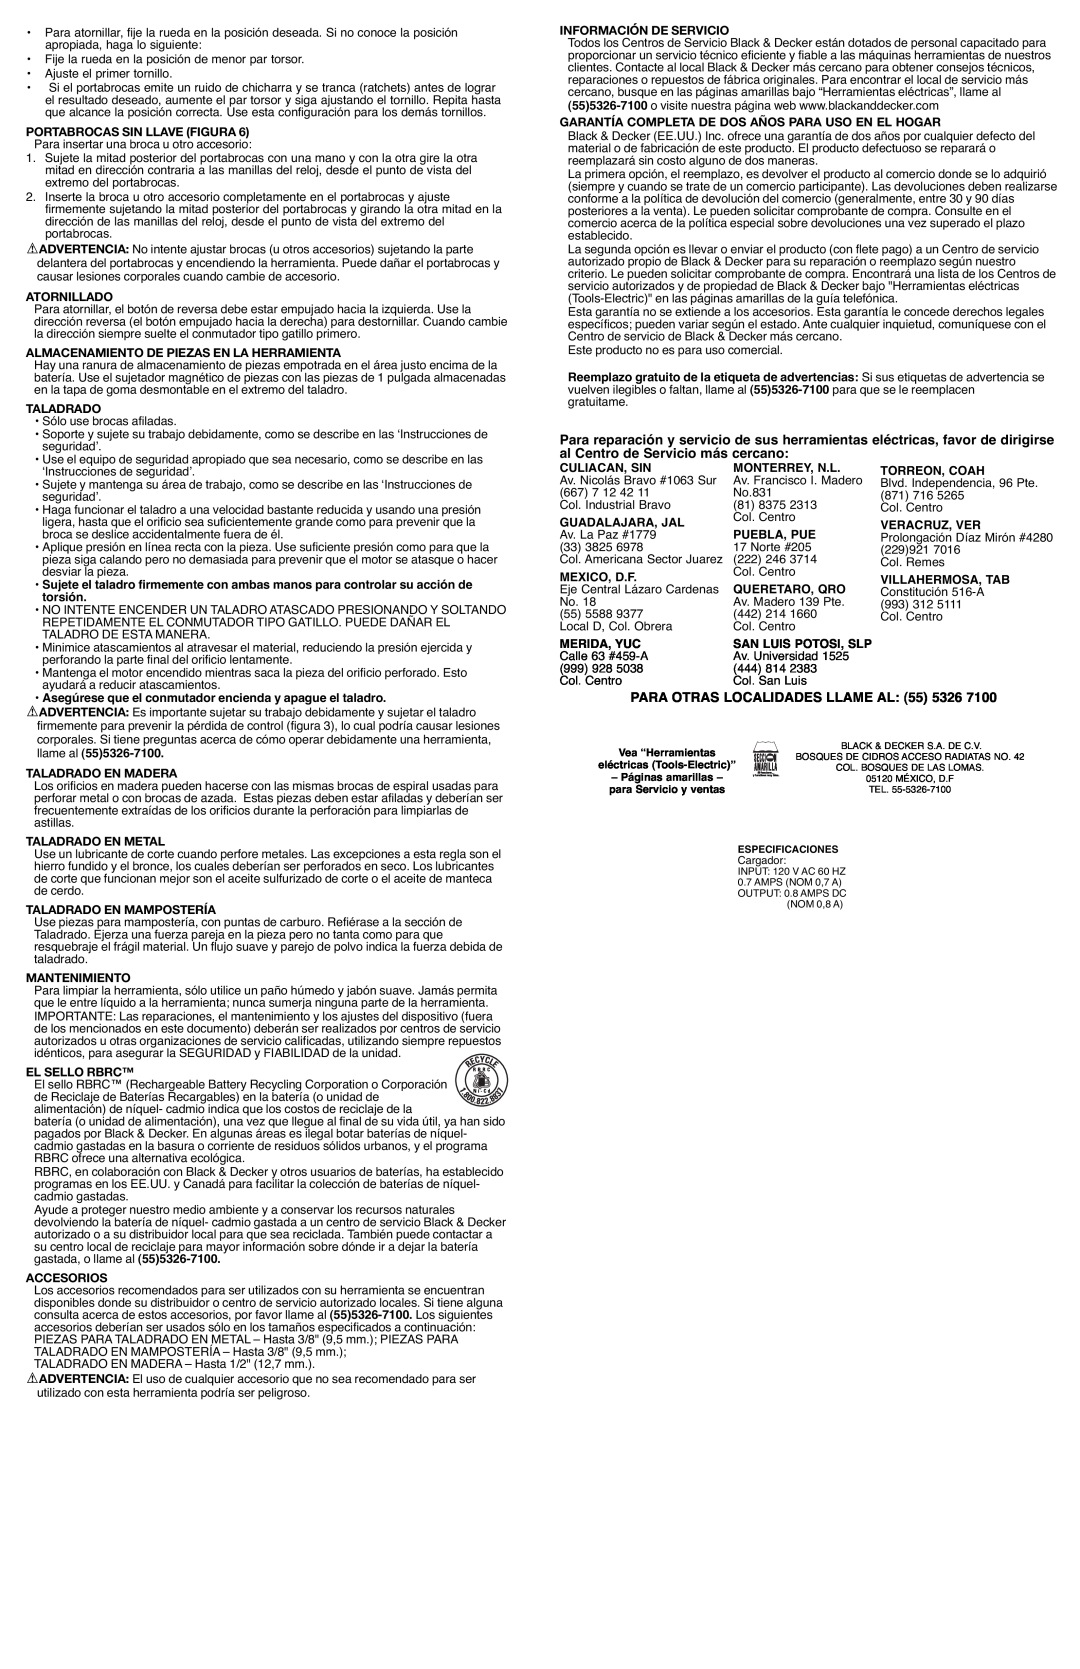 Black & Decker PS180S, PS2400 instruction manual PARA OTRAS LOCALIDADES LLAME AL 55 5326 